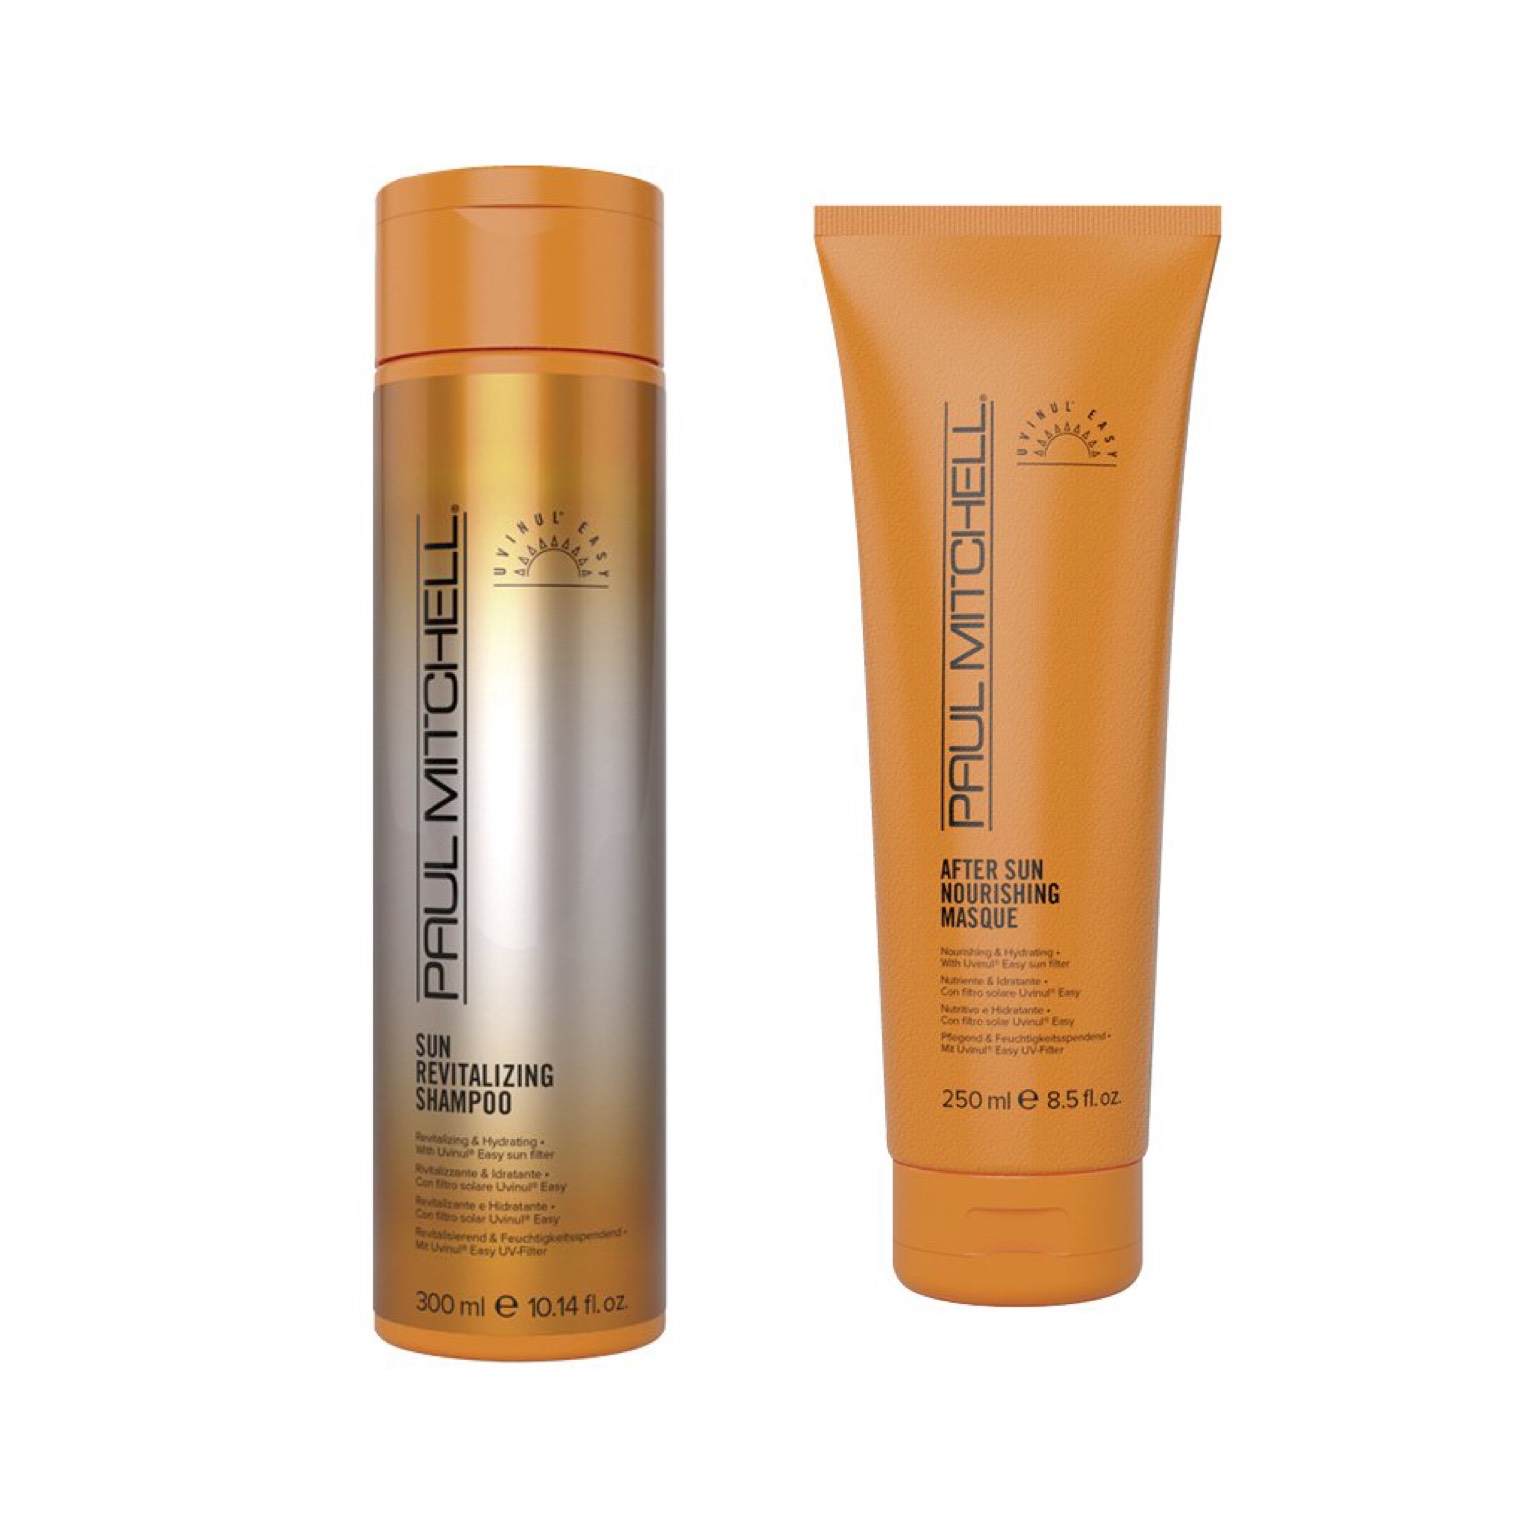 Paul Mitchell Sun Revitalizing Shampoo 250ml + After Sun Nourishing Masque 250ml